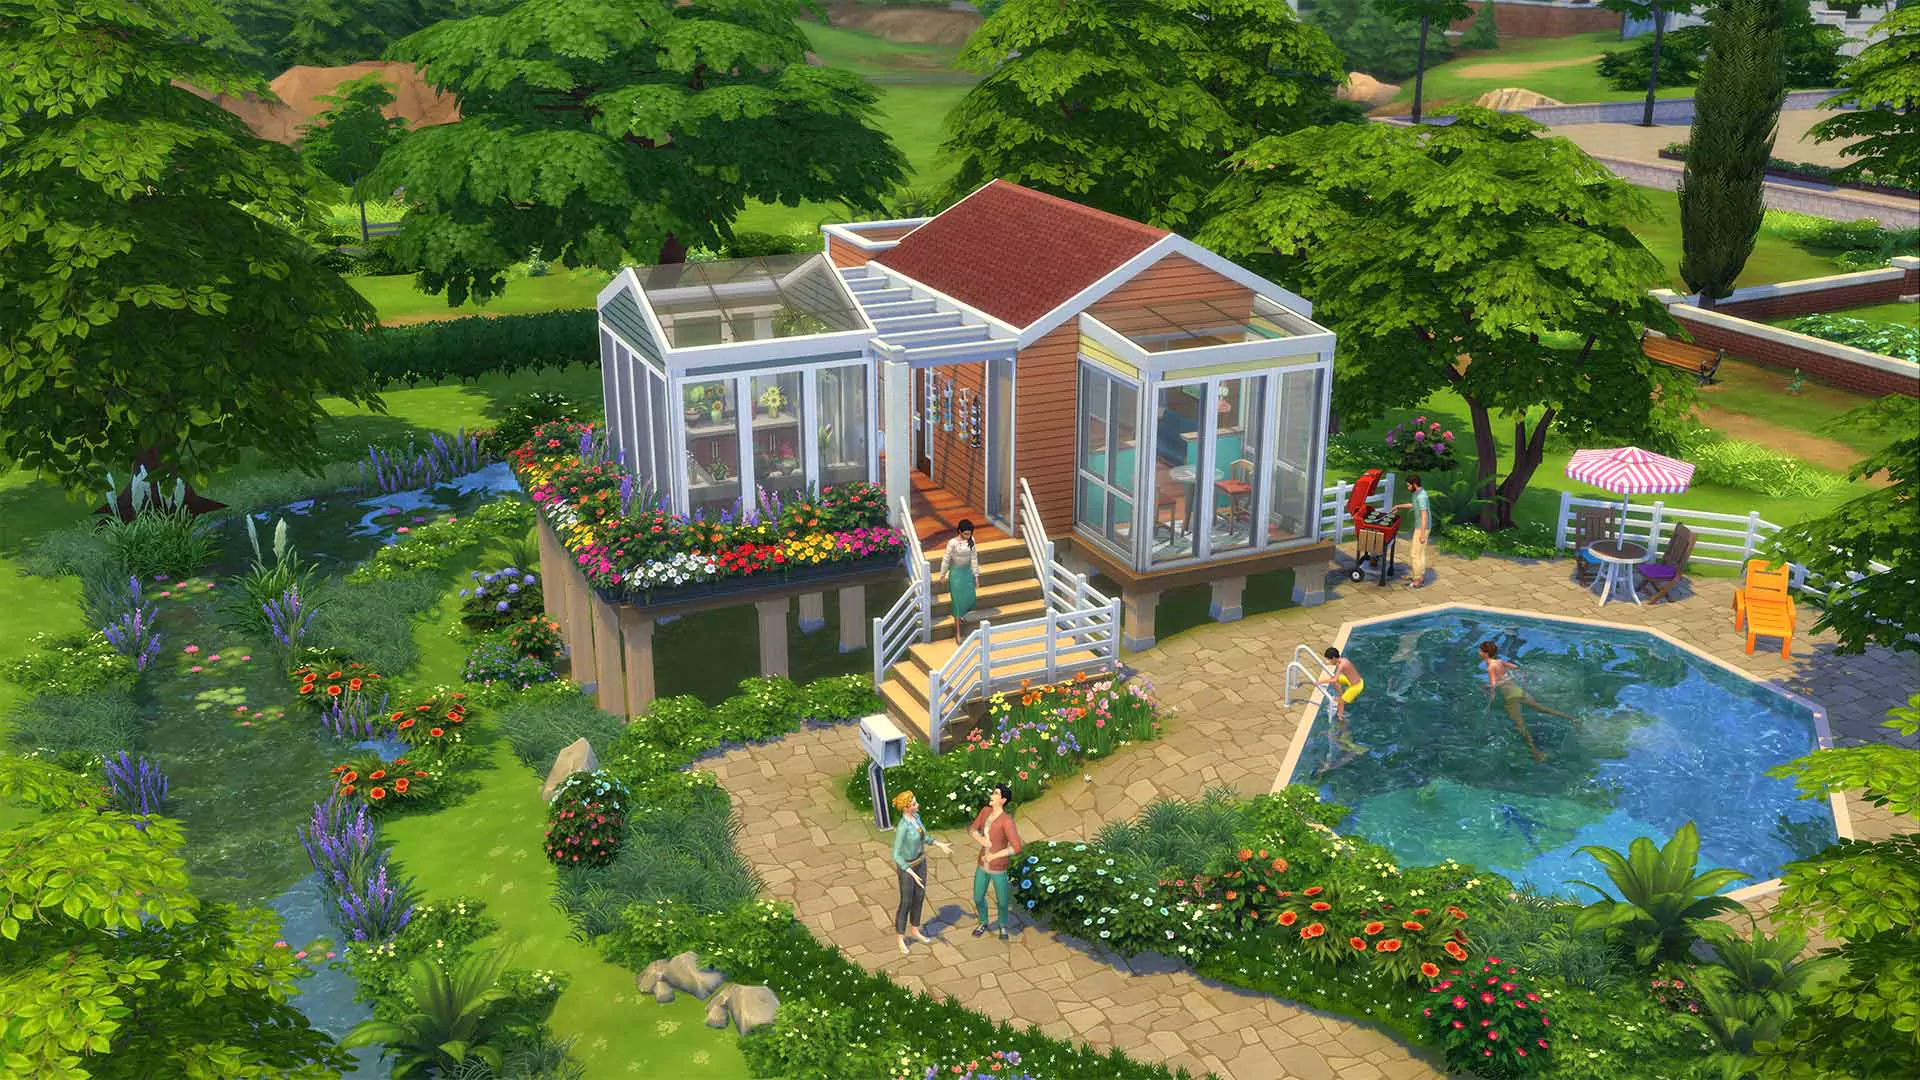 The Sims 4 Tiny Living Stuff - The Sim Architect